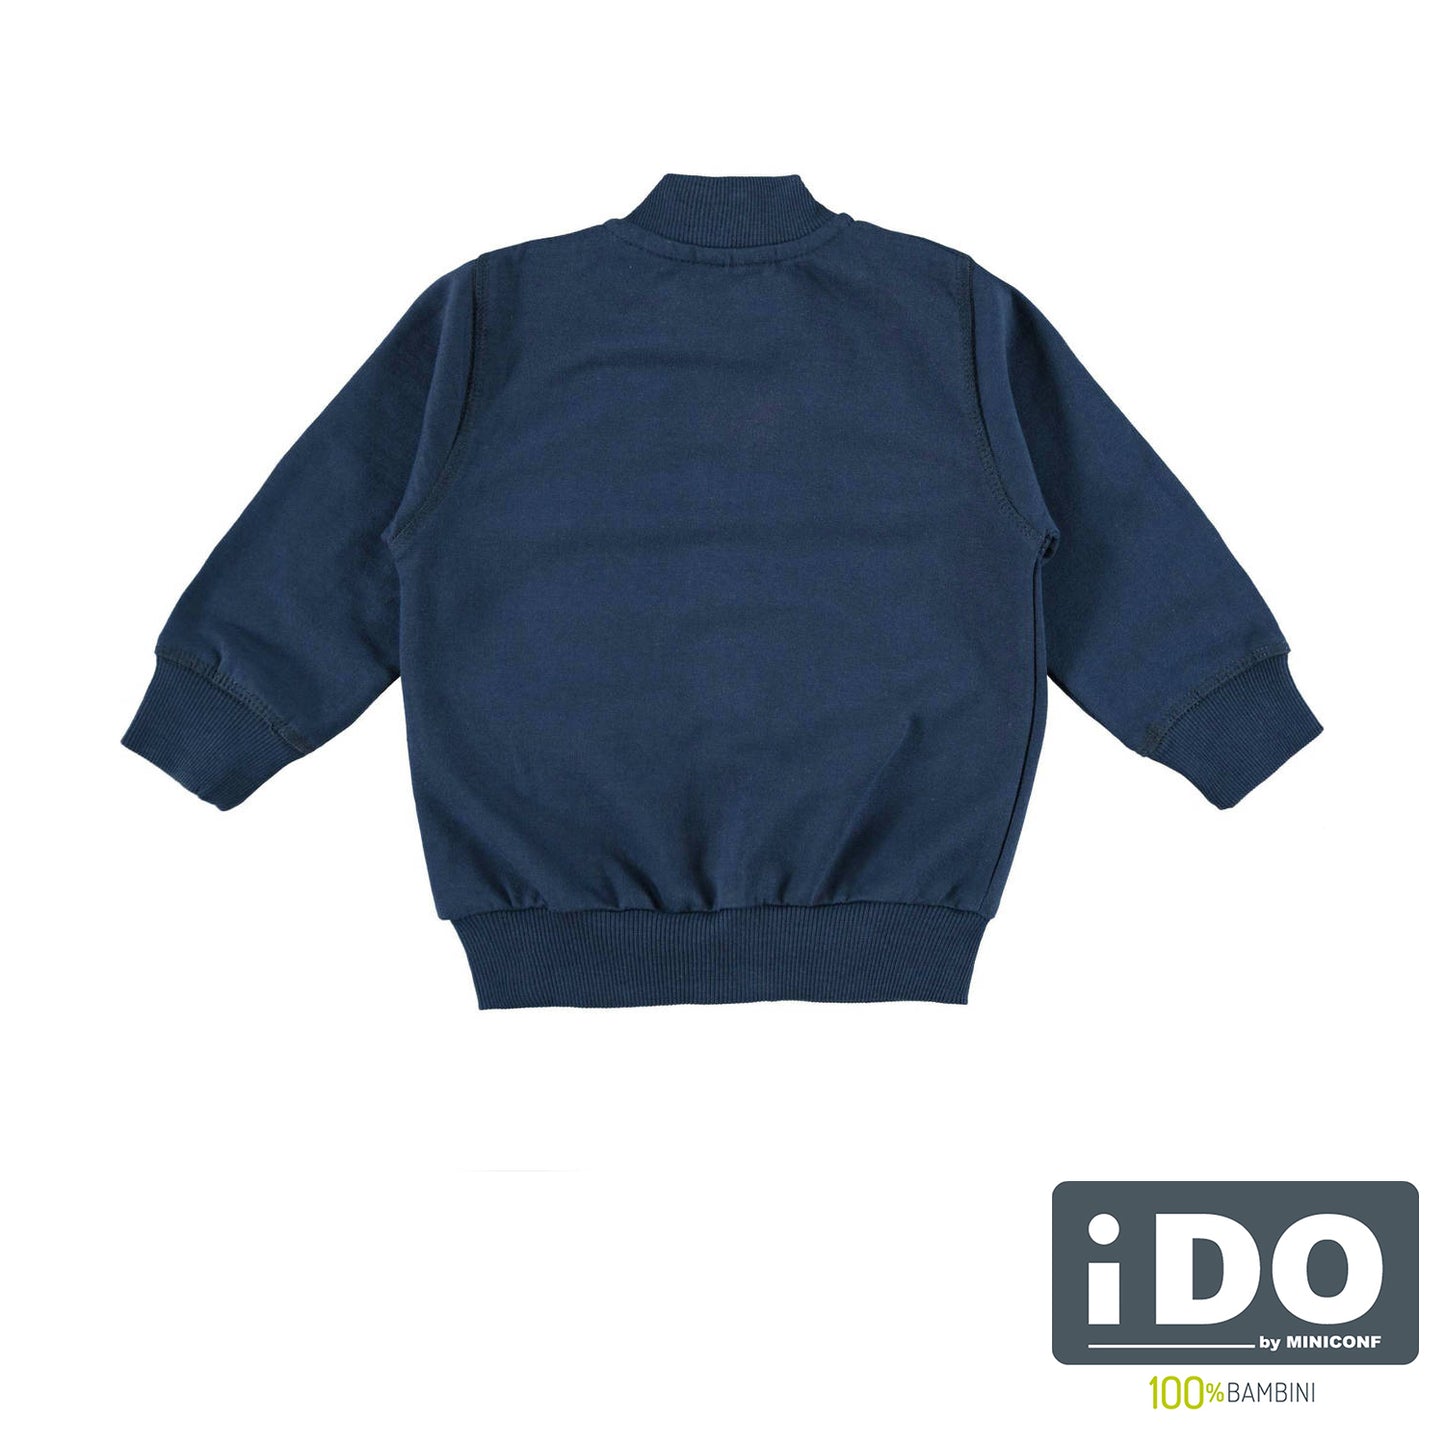 iDO - Boy's Blue Sweatshirt From 9m to 4 years